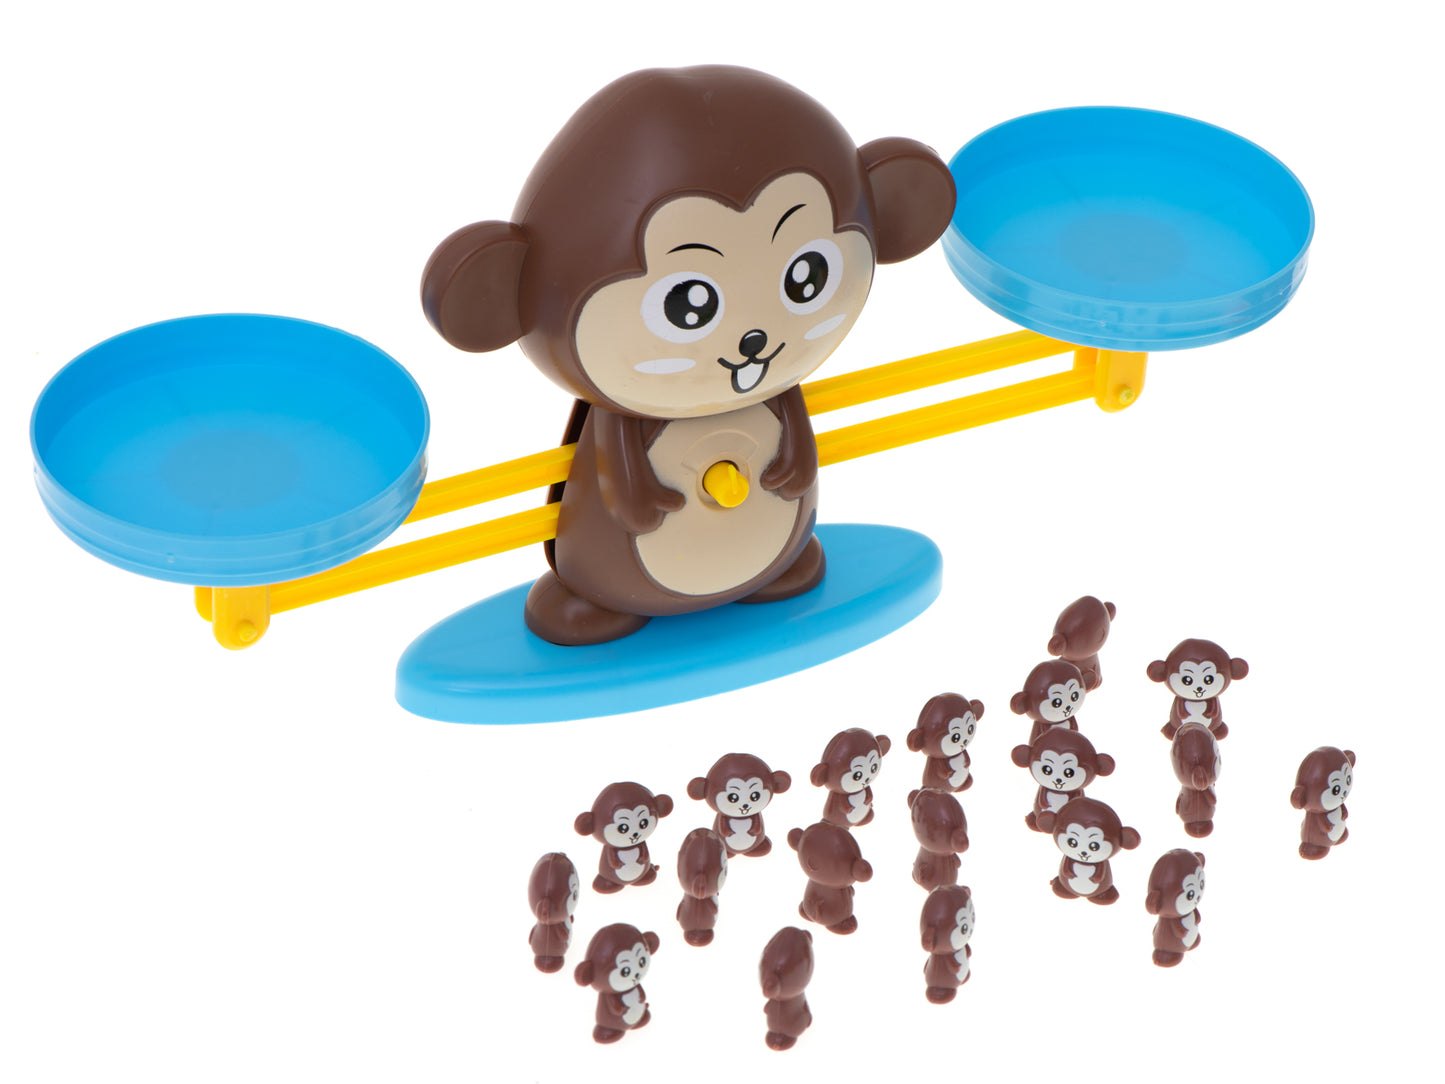 Monkey Balance Educational Fun Game